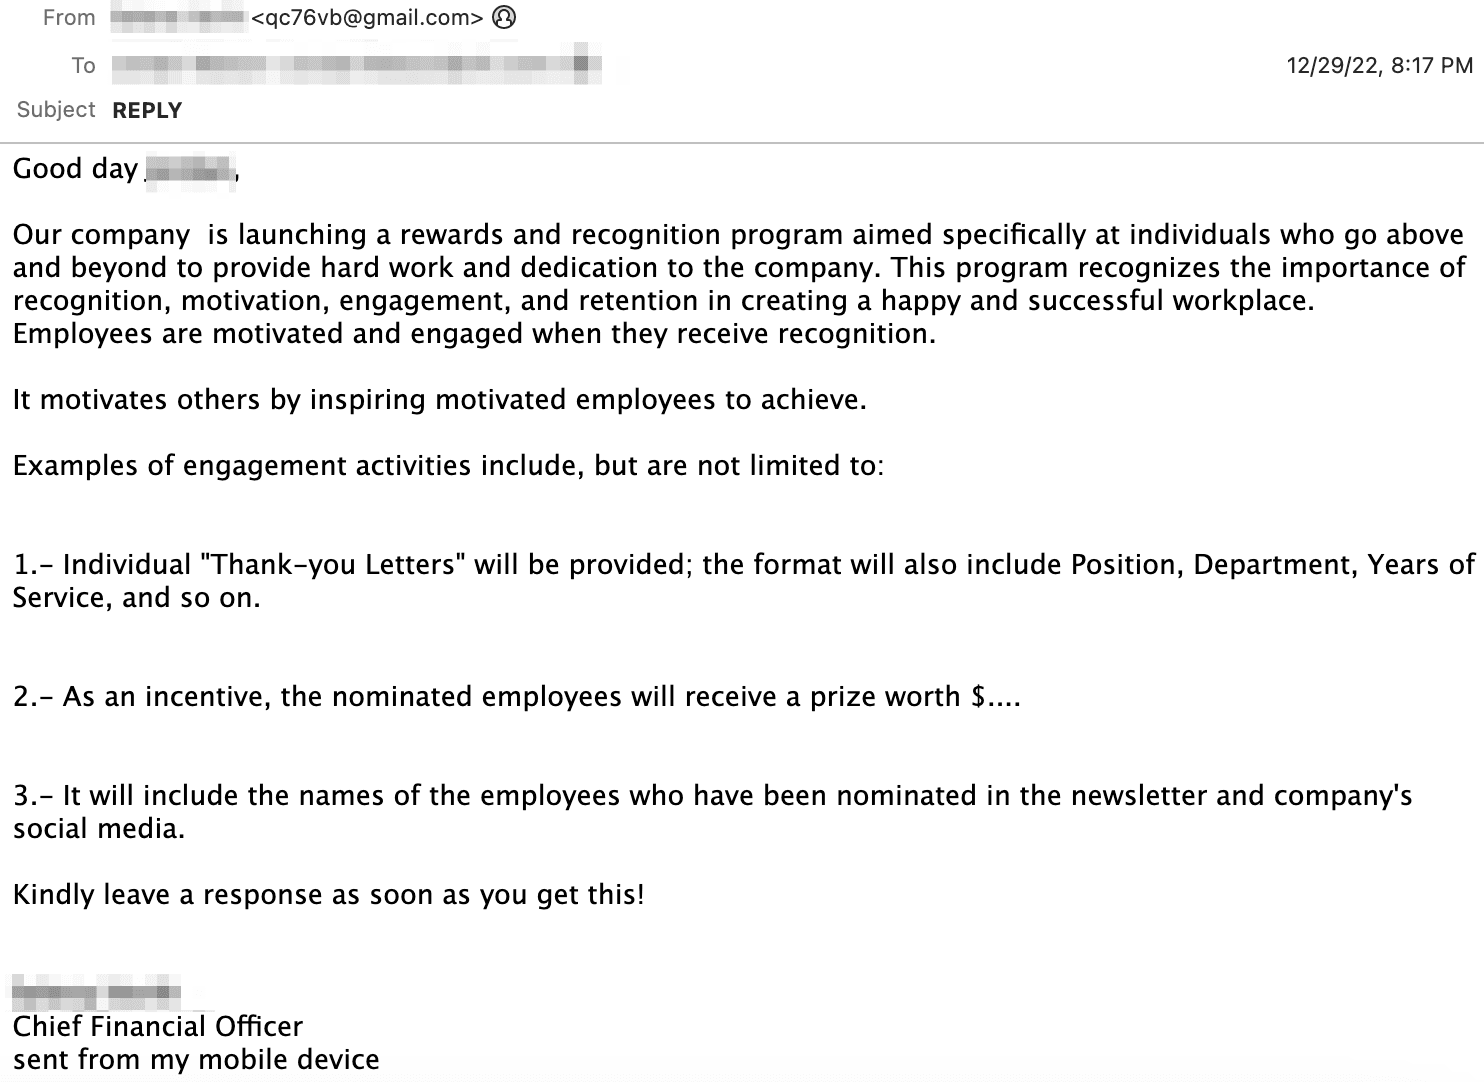 Response-based myGov Credential Phishing Email 1